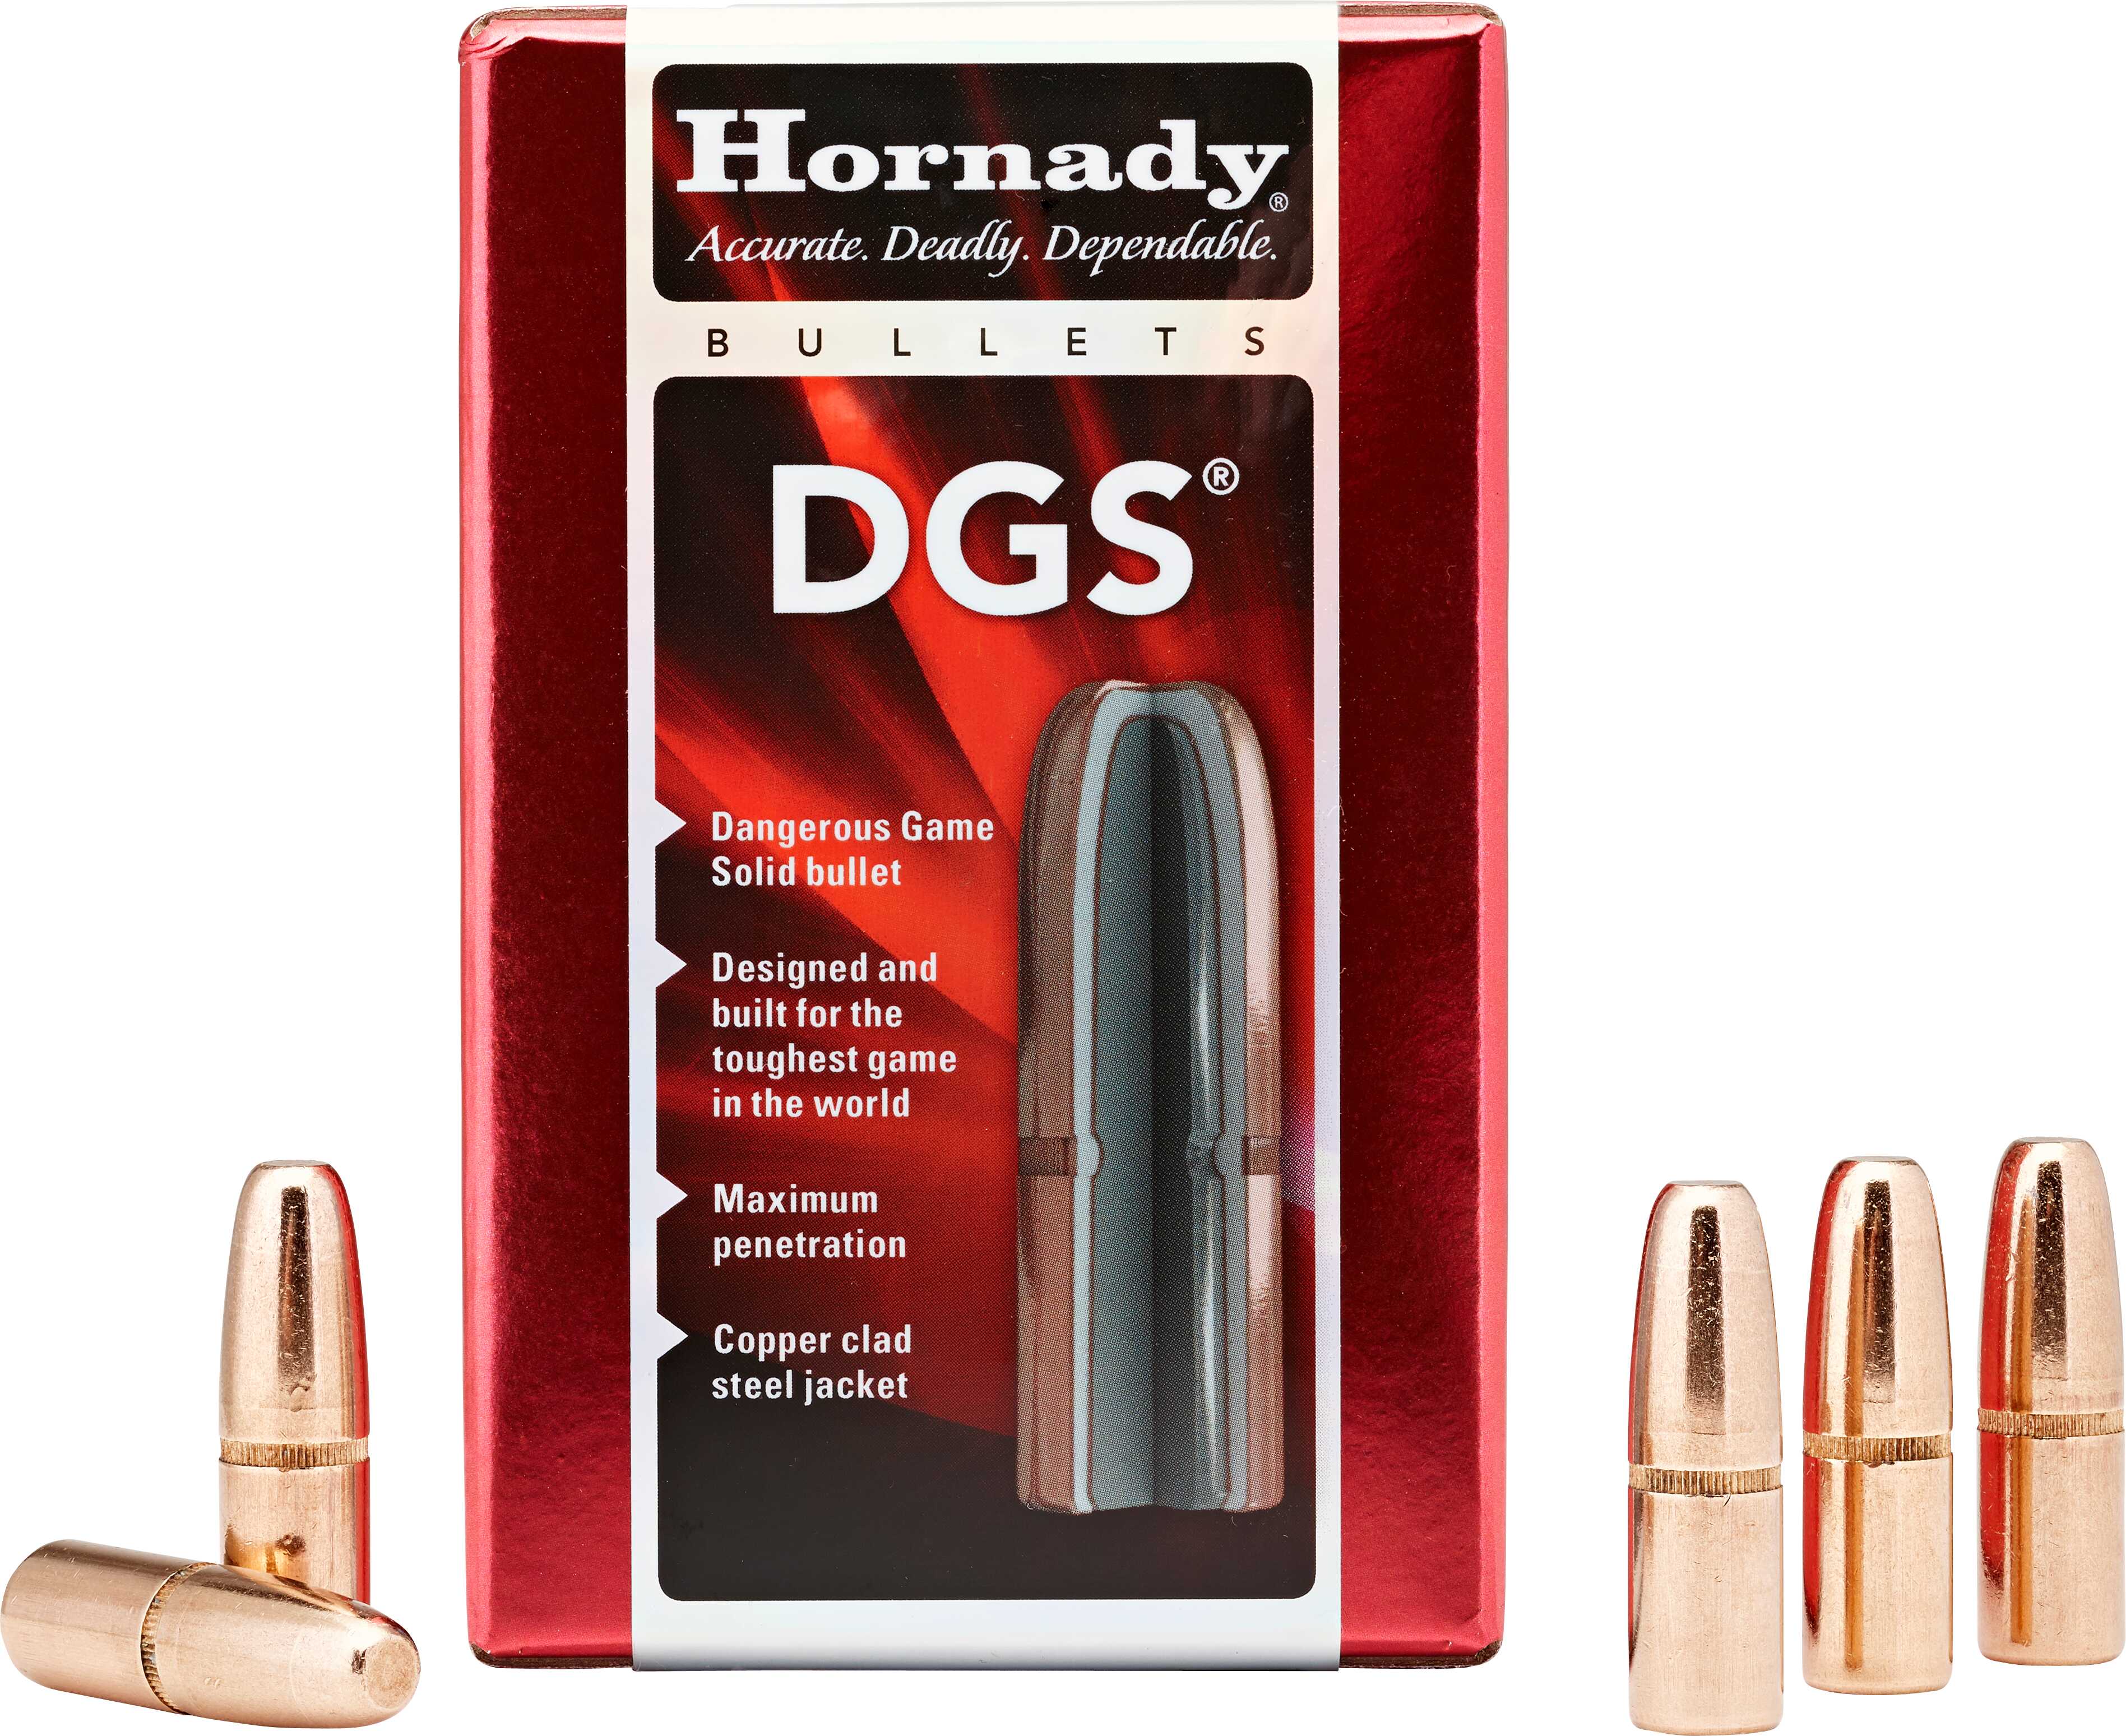 Hornady .458 Caliber 500 Grain DGS Dangerous Game Solid  Bullets 50/Box Md: 4507